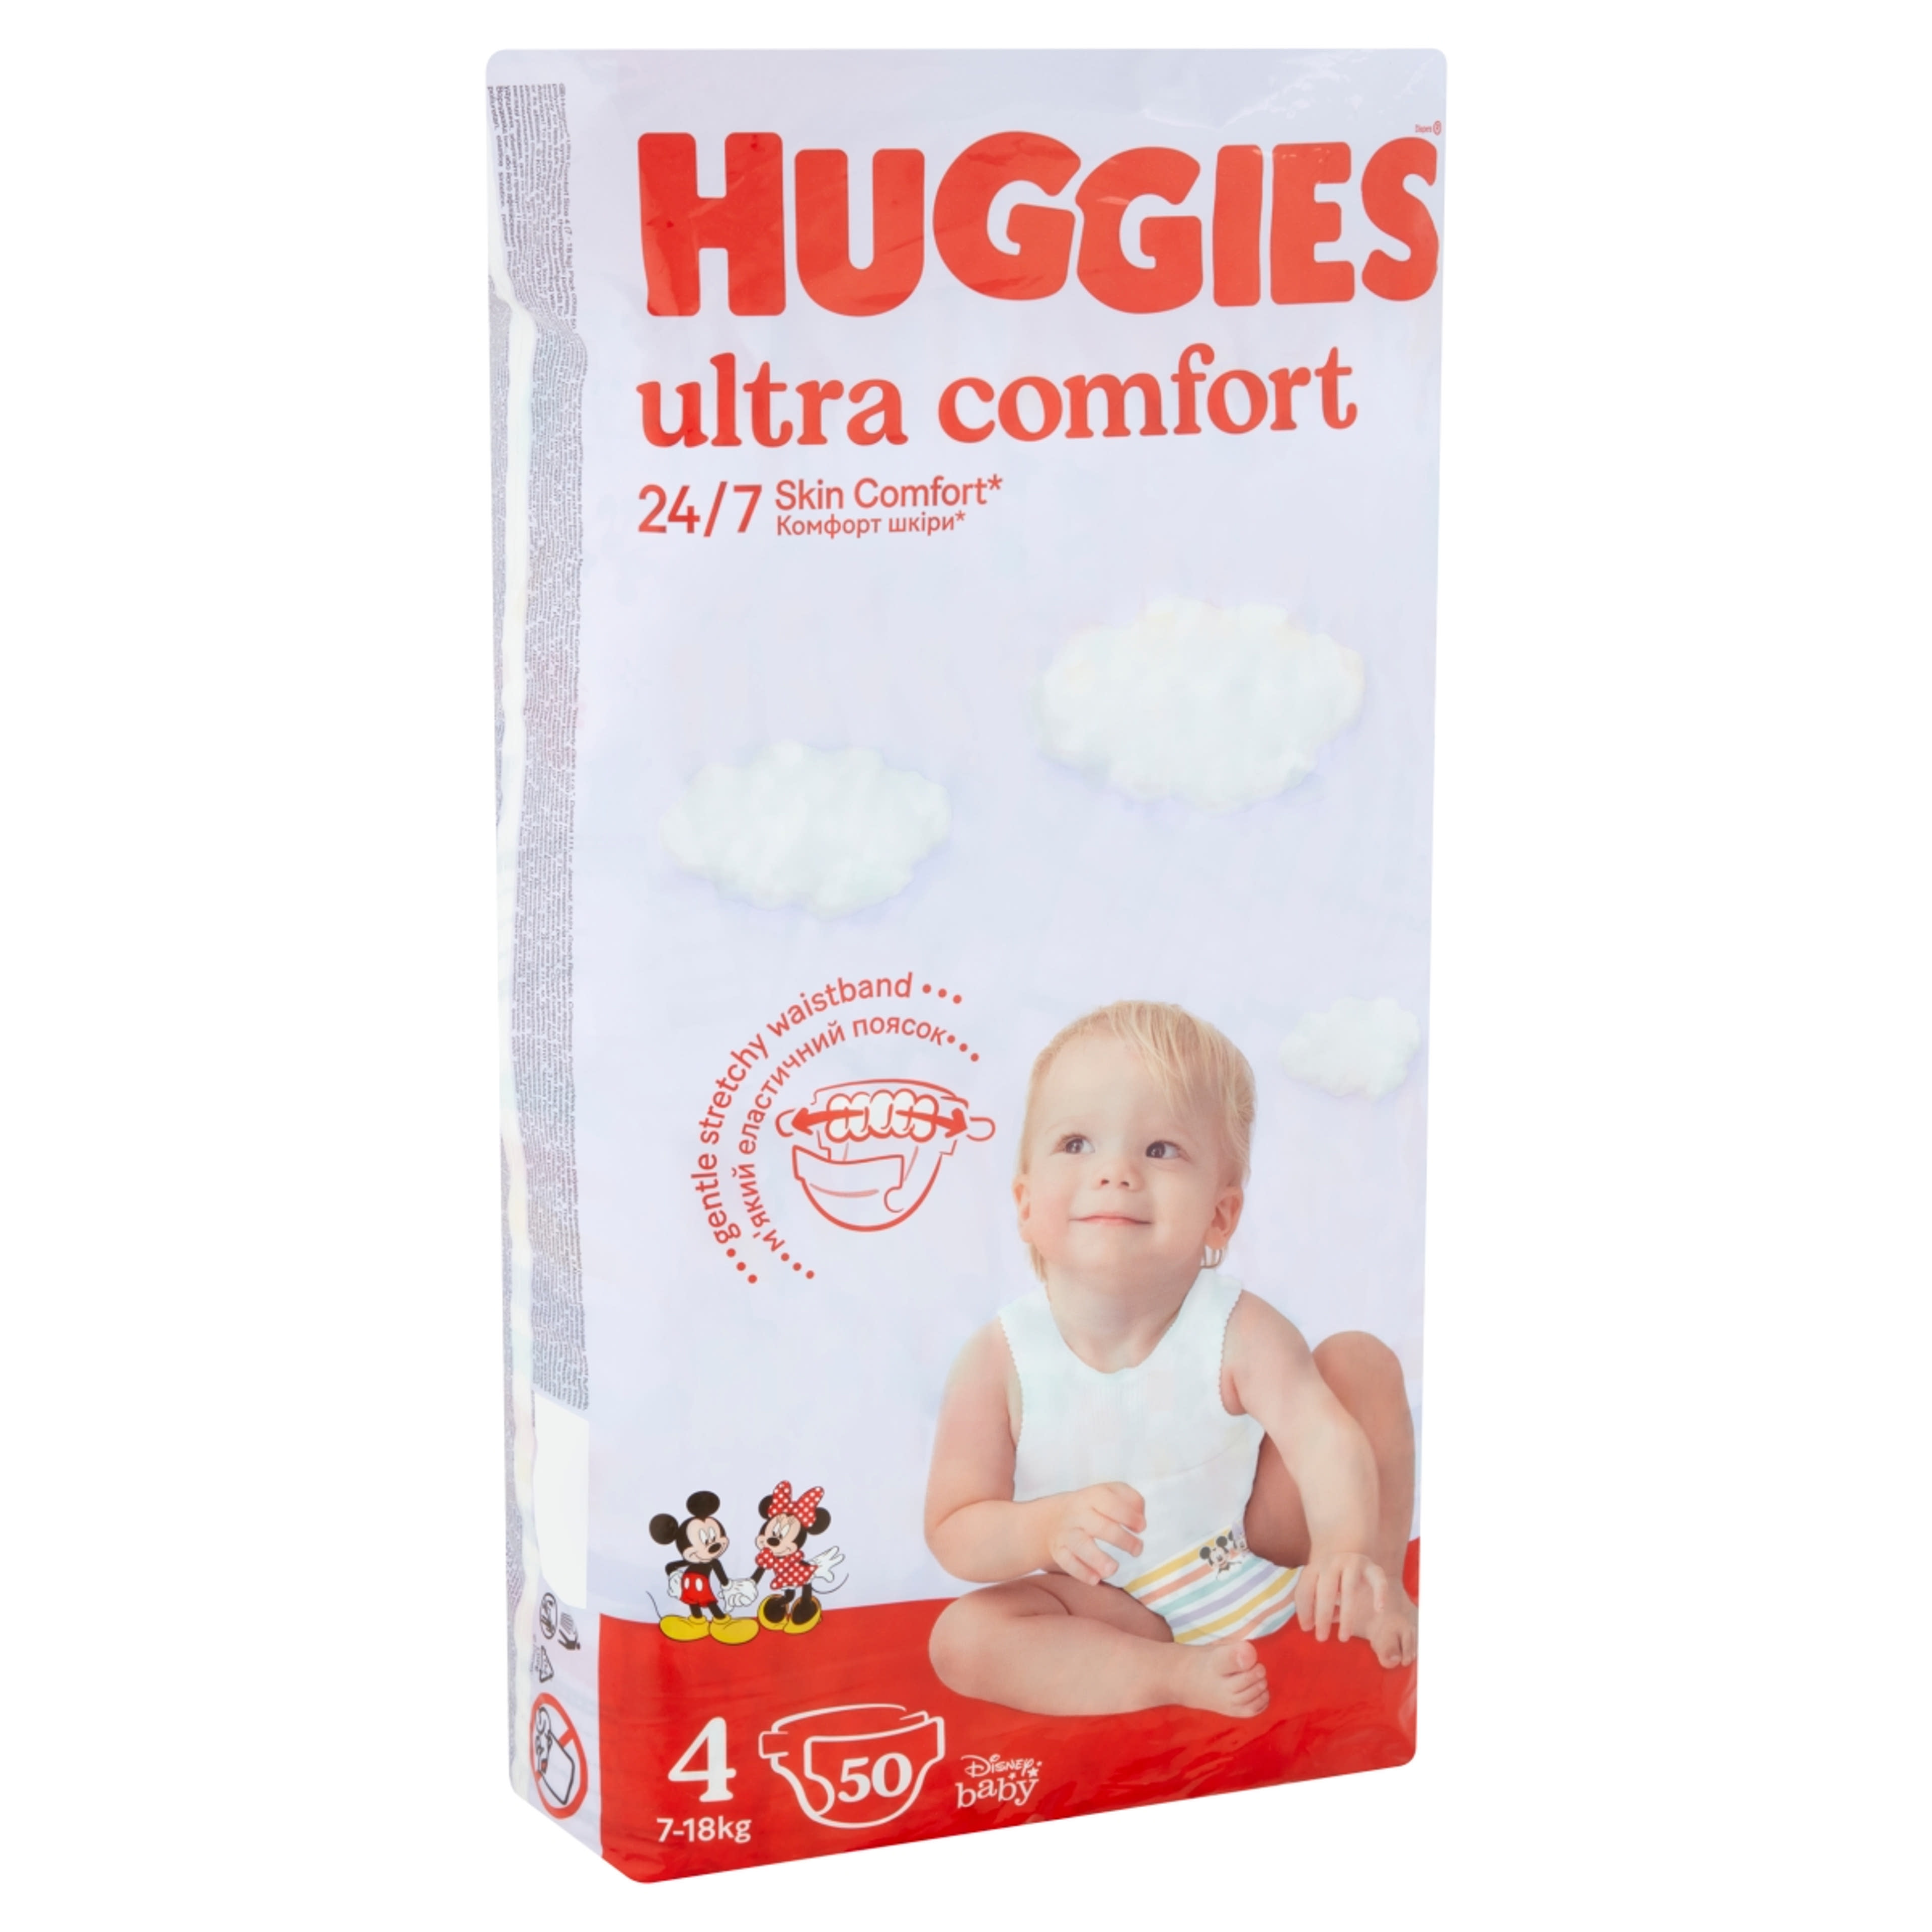 Huggies Ultra Comfort 4 nadrágpelenka 7-18 kg - 50 db-2